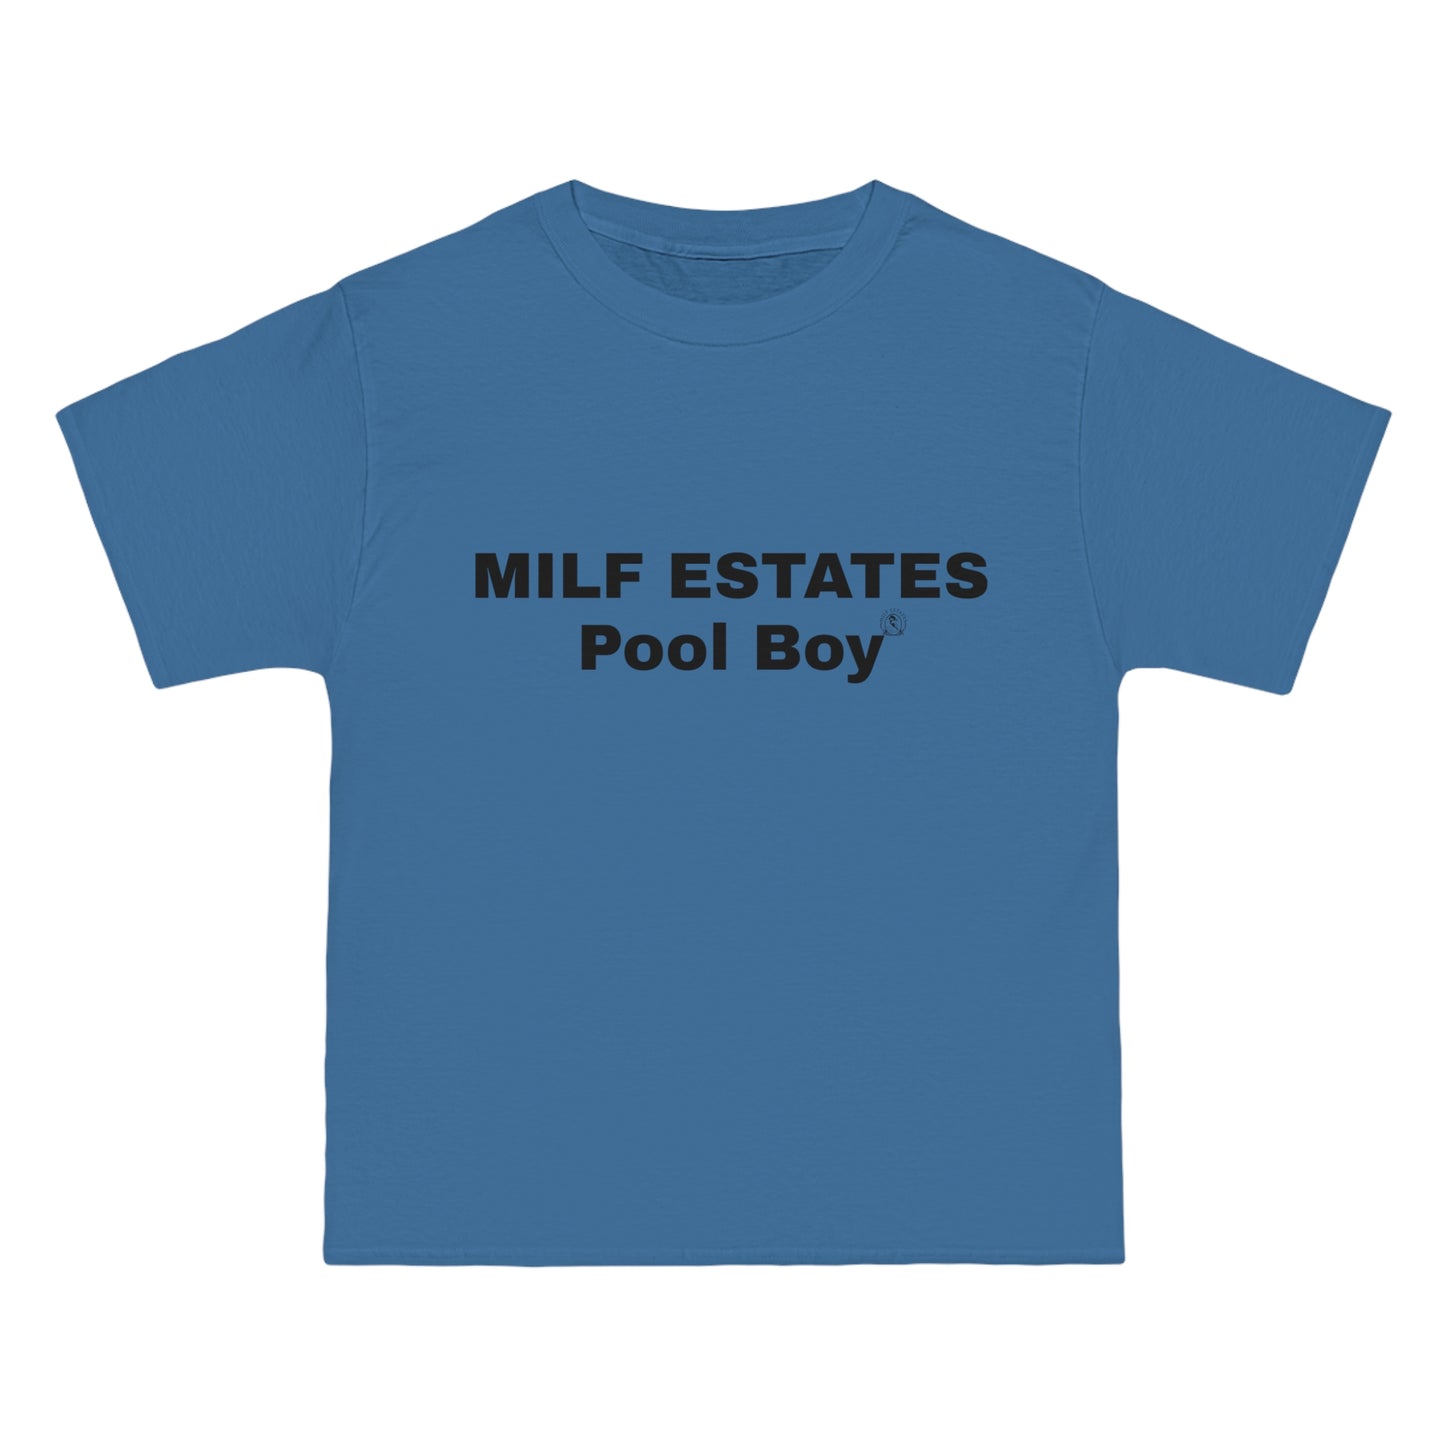 MILF ESTATES Pool Boy